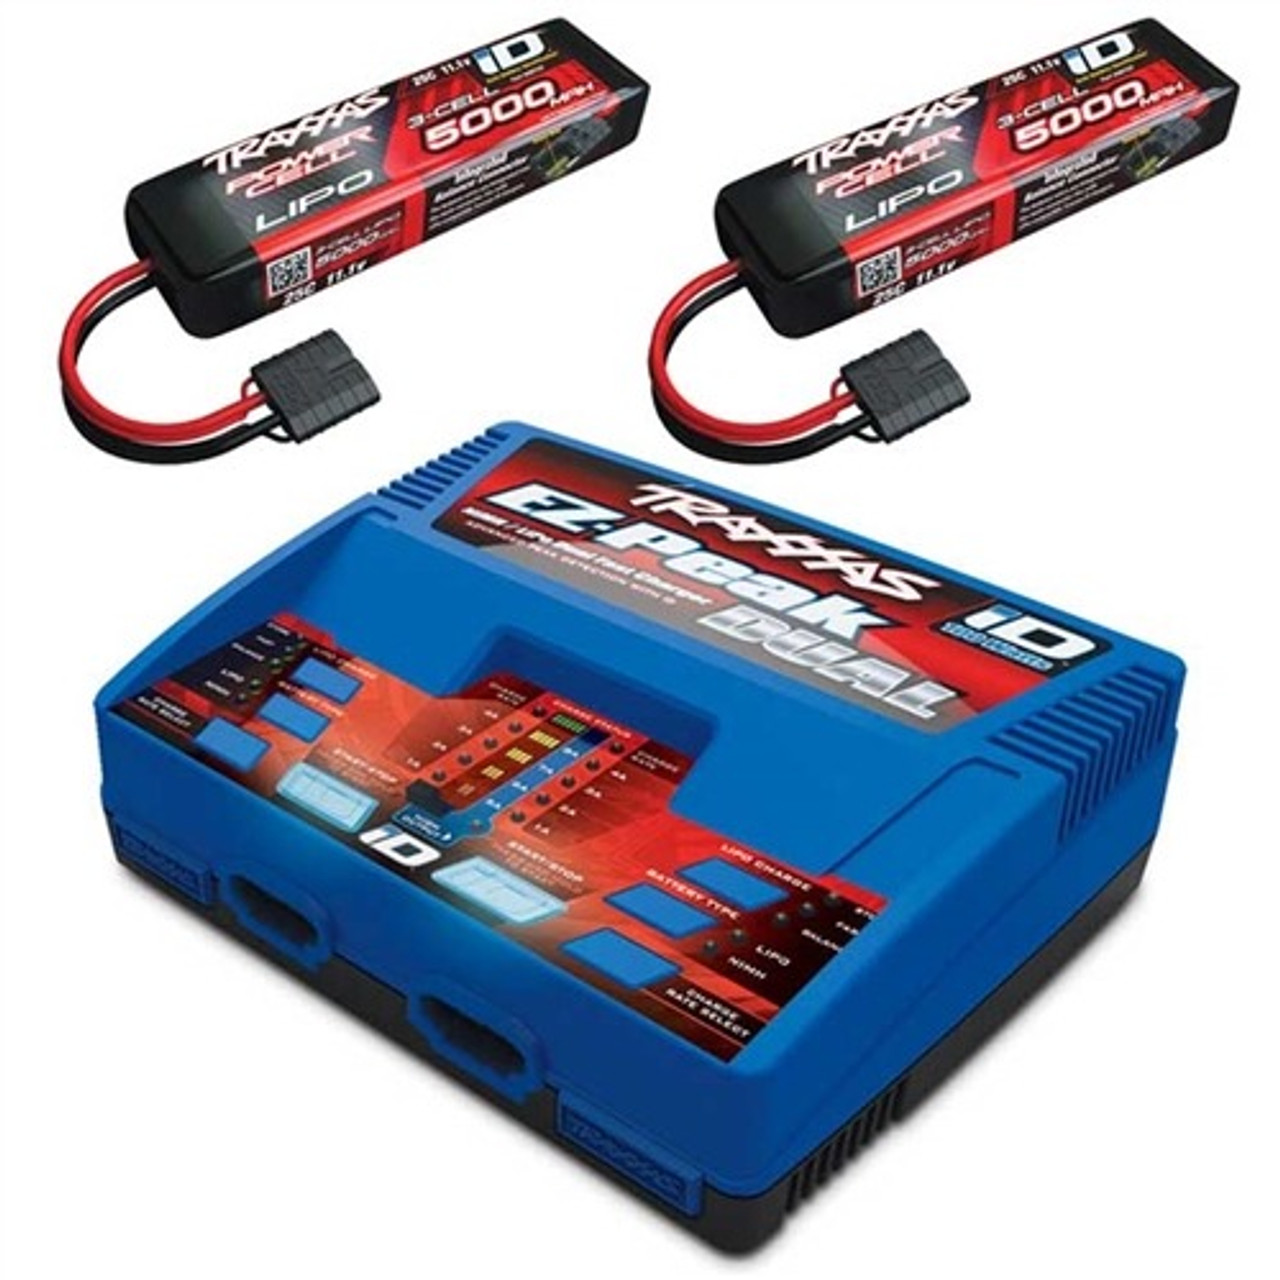 RC Lipo Batteries & More